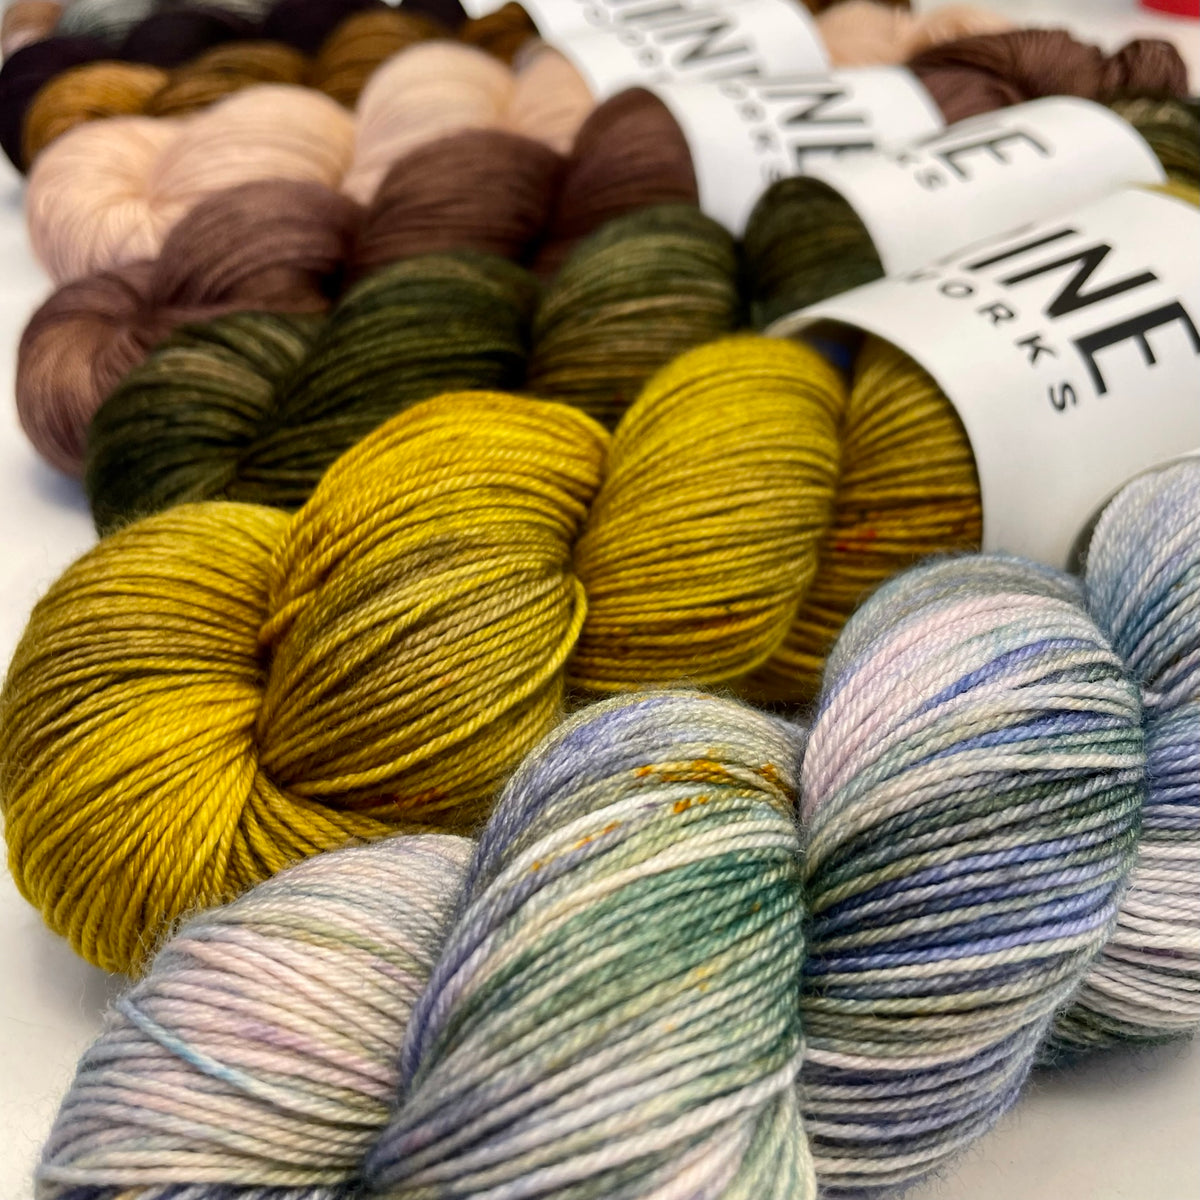 WORSTED Weight Mini Skeins, Hand Dyed Yarn, 100% Superwash Merino Wool -  Saturated, Tonal Colors Knitting Yarn, 20g Per Skein